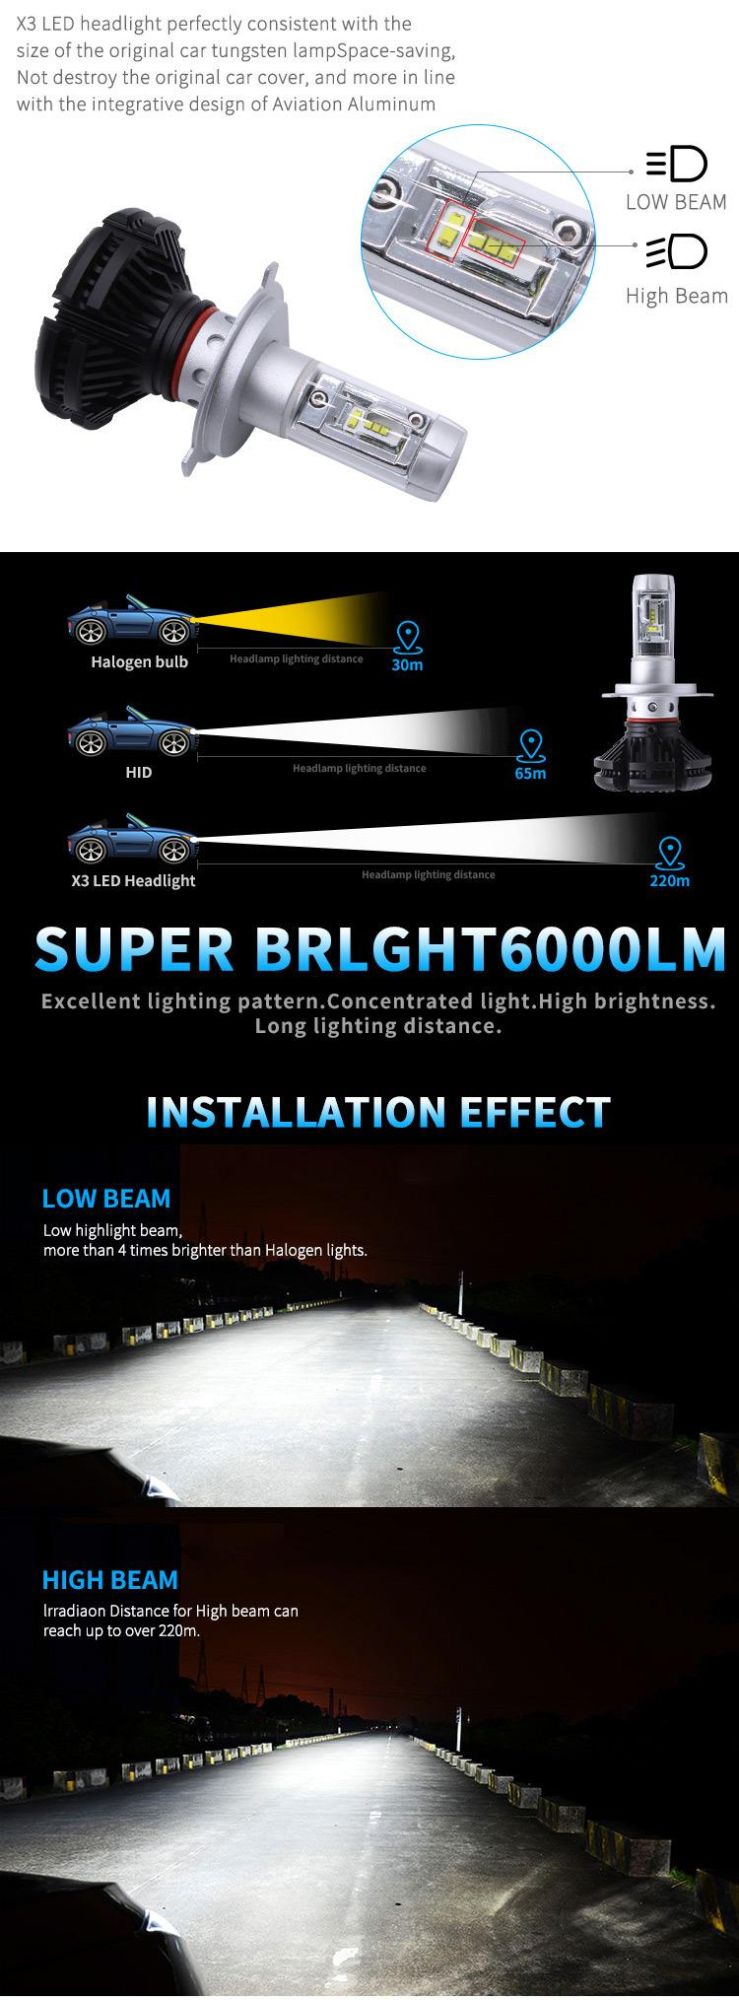 X3 6000lm H1 H16j 5202 Car LED Headlights for Car